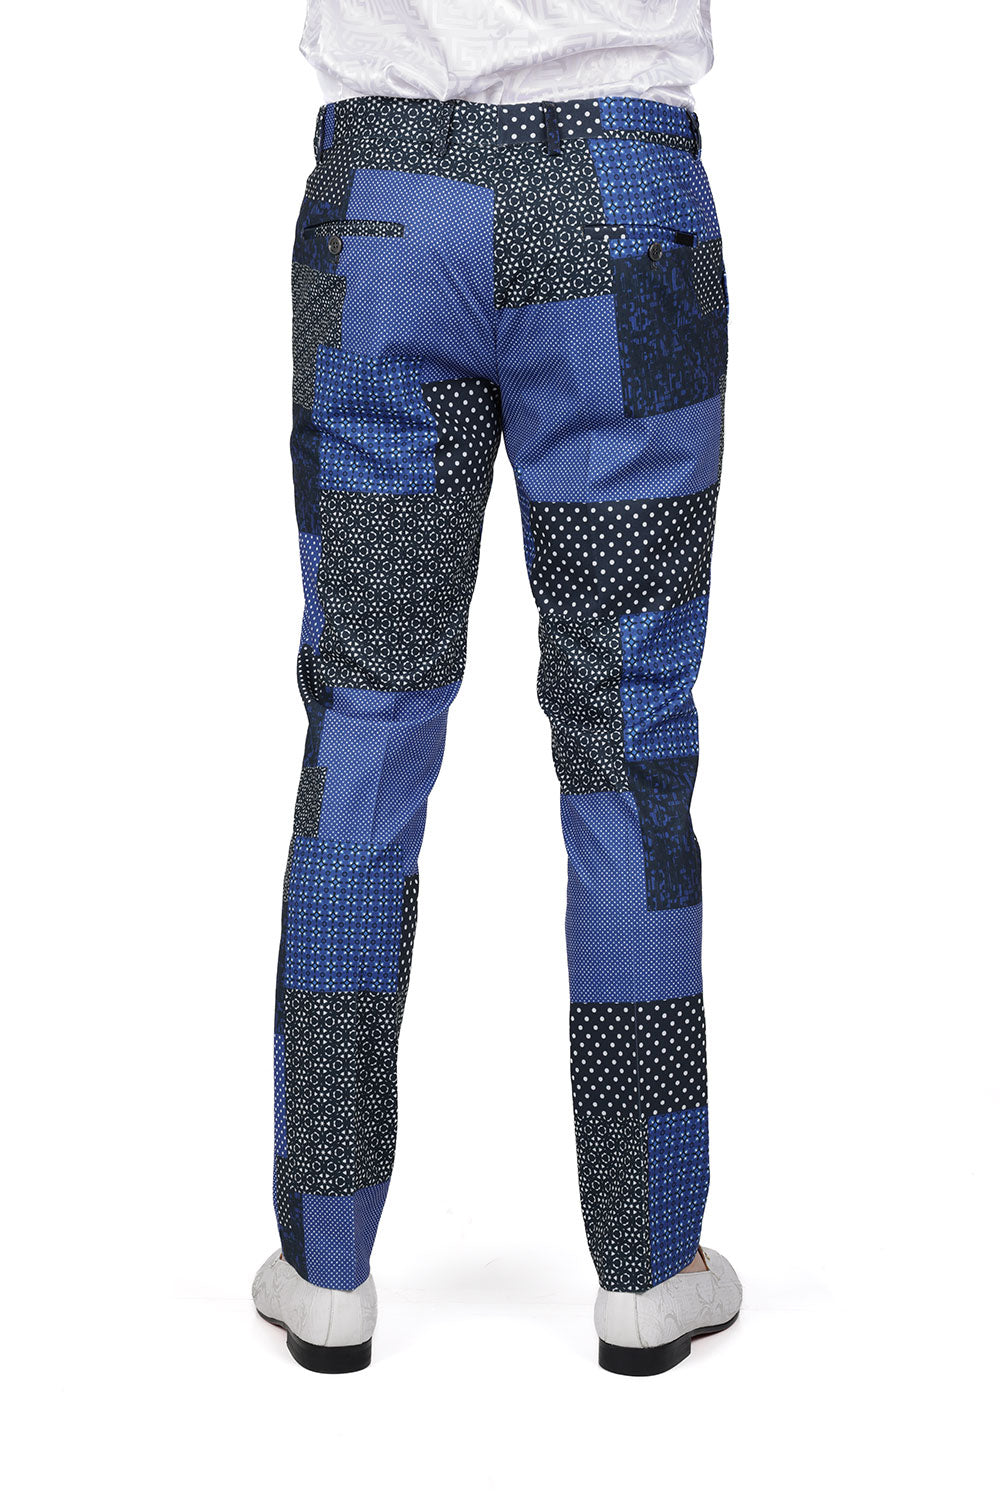 BARABAS men's checkered plaid blue checkers luxury chino pants CP163